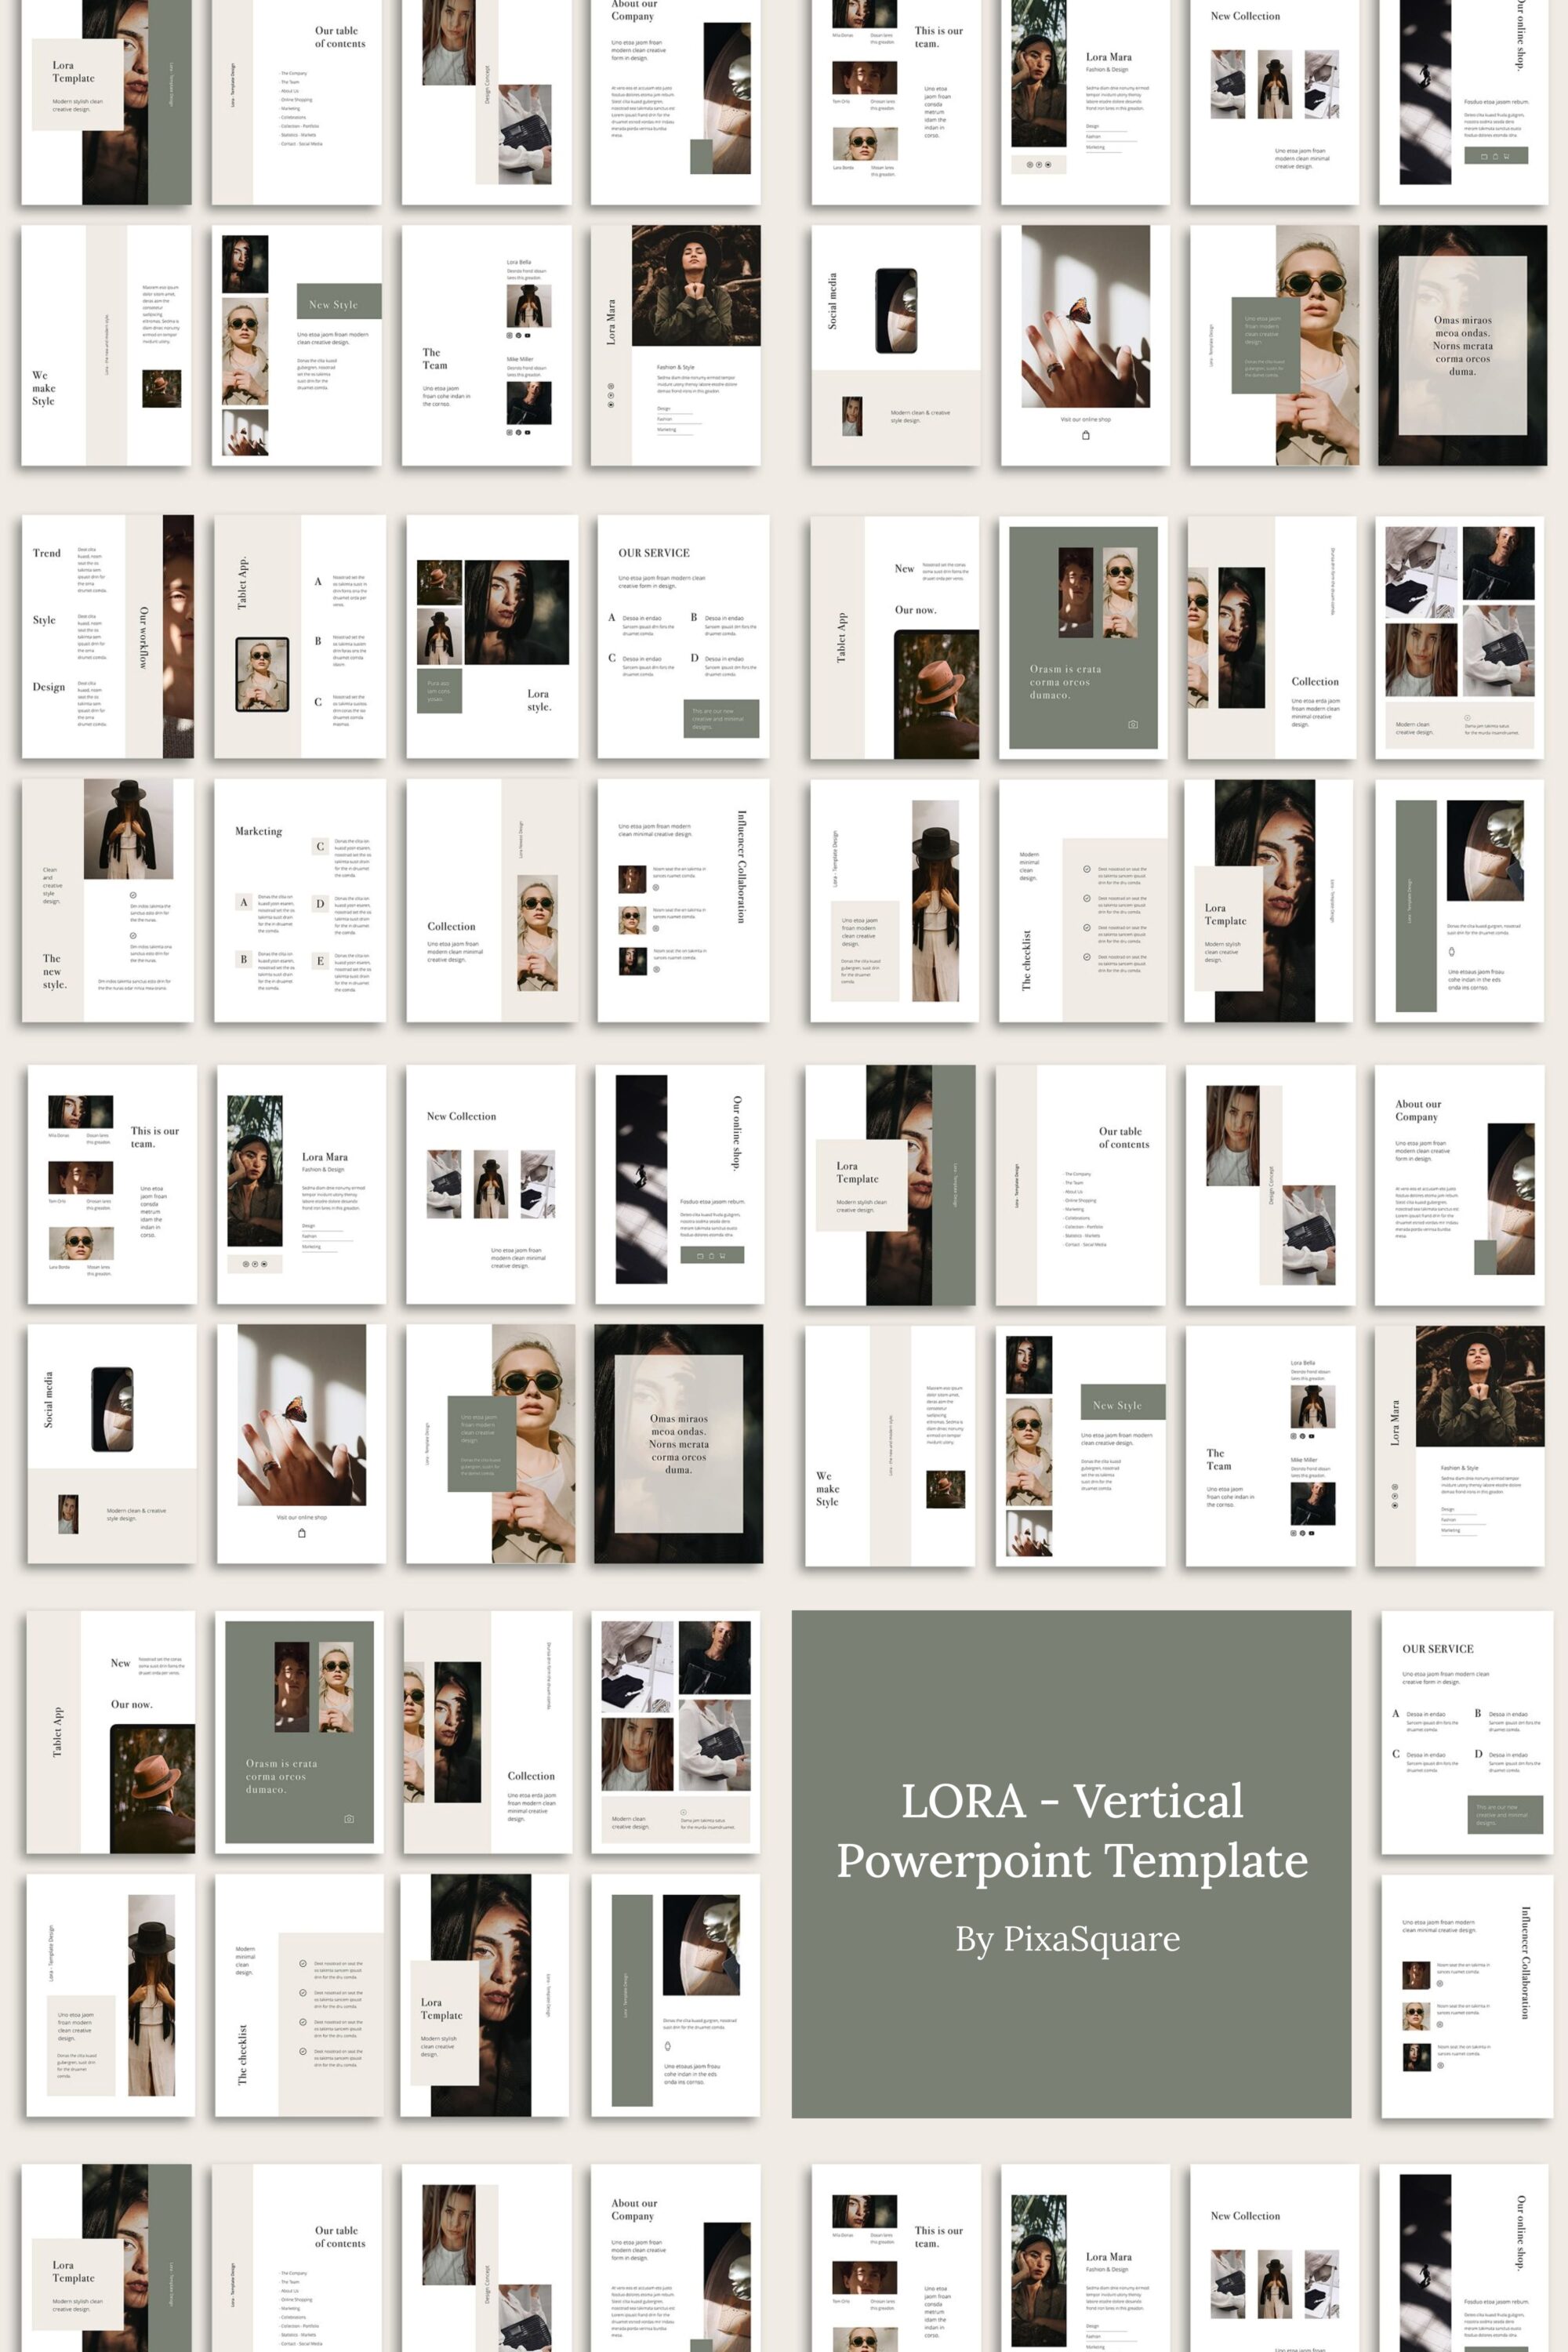 lora vertical powerpoint template 03